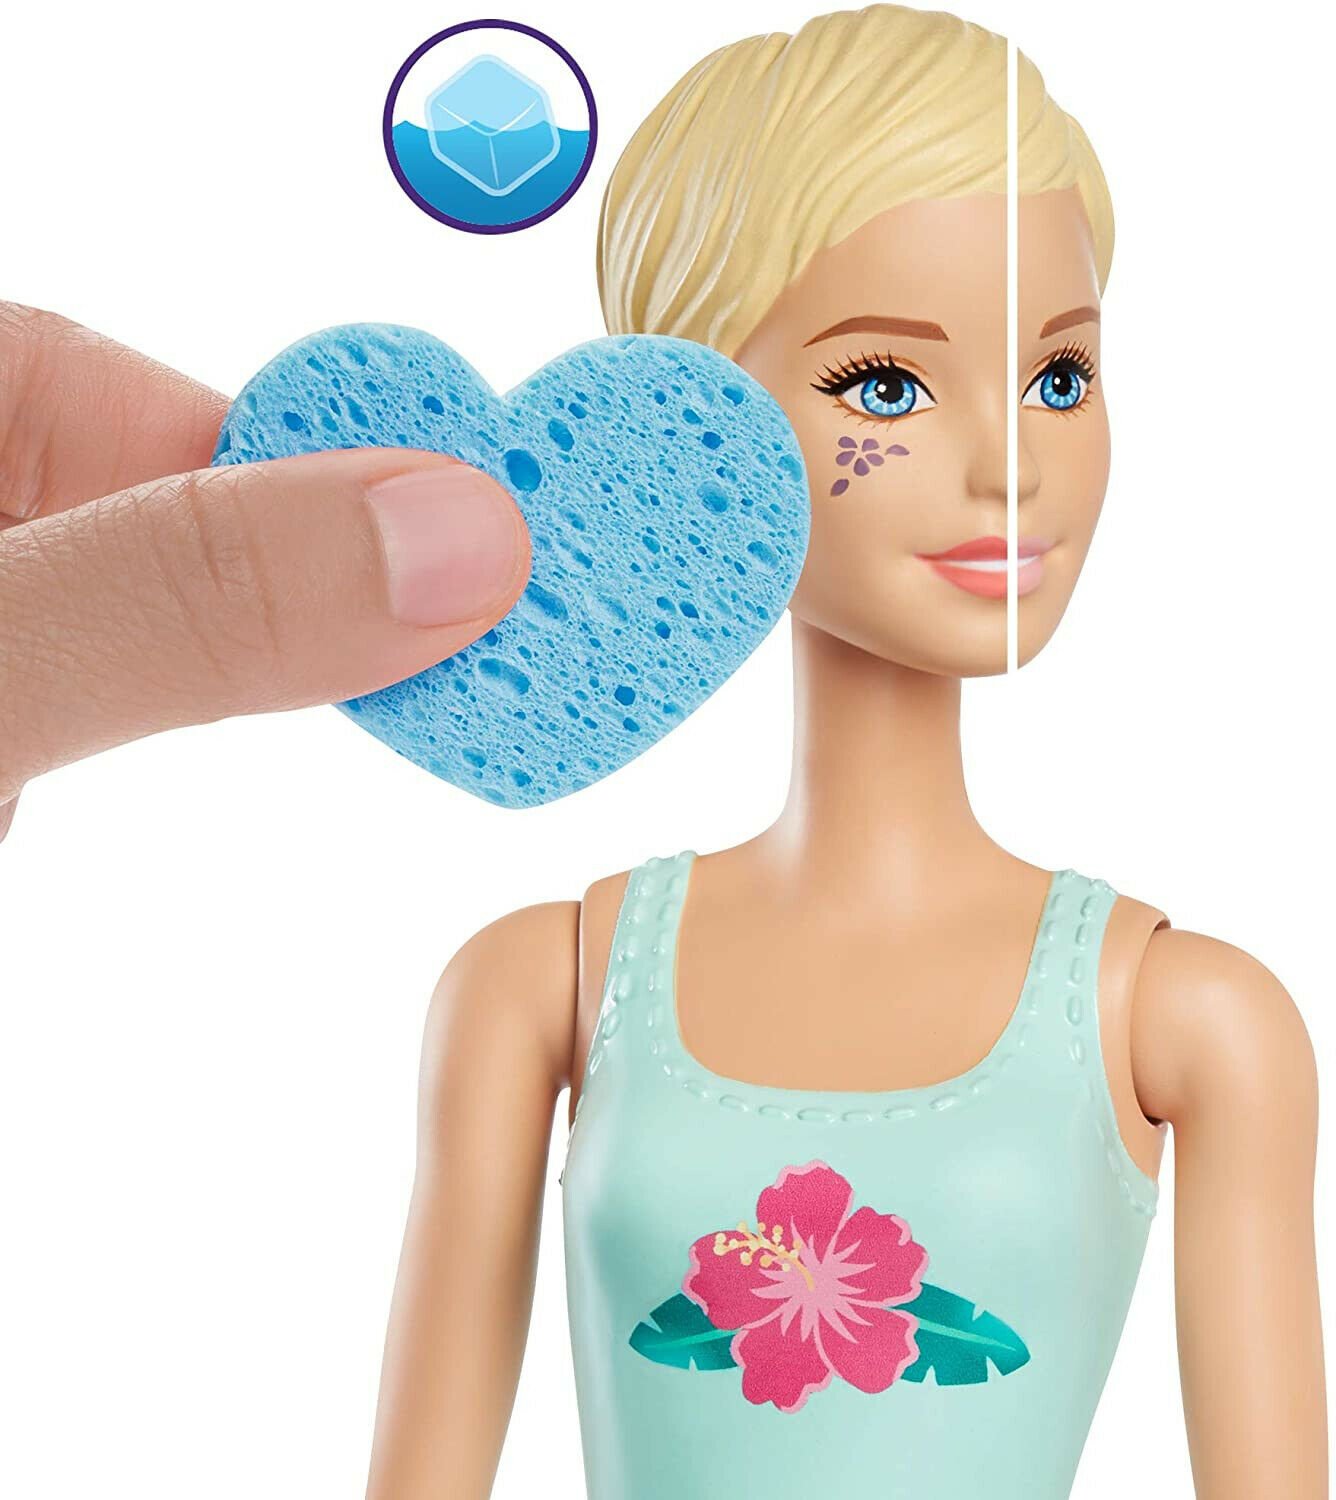 MATTEL Barbie 芭比娃娃 芭比驚喜造型娃娃戶外系列【特價品】【隨機出貨】